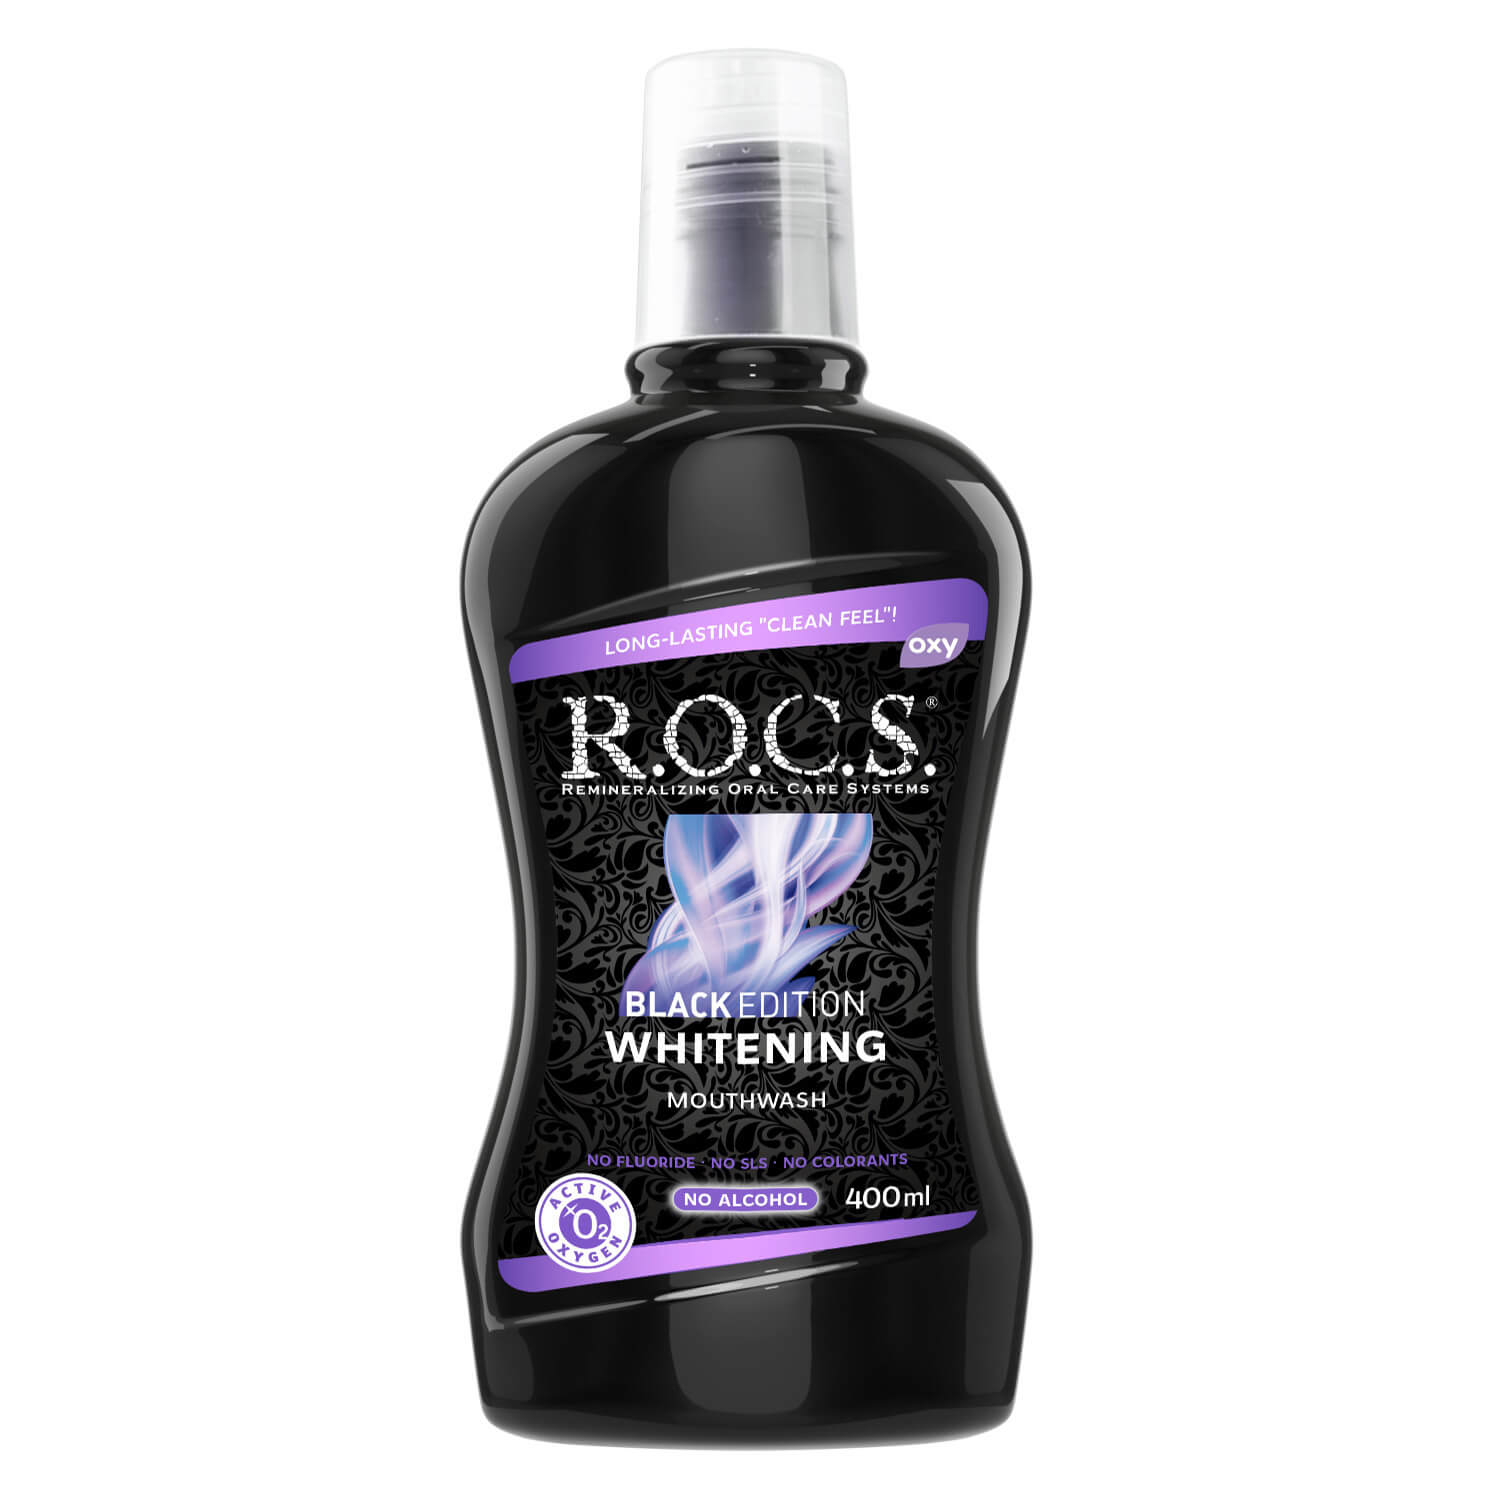 R.O.C.S. Black Edition mouthwash